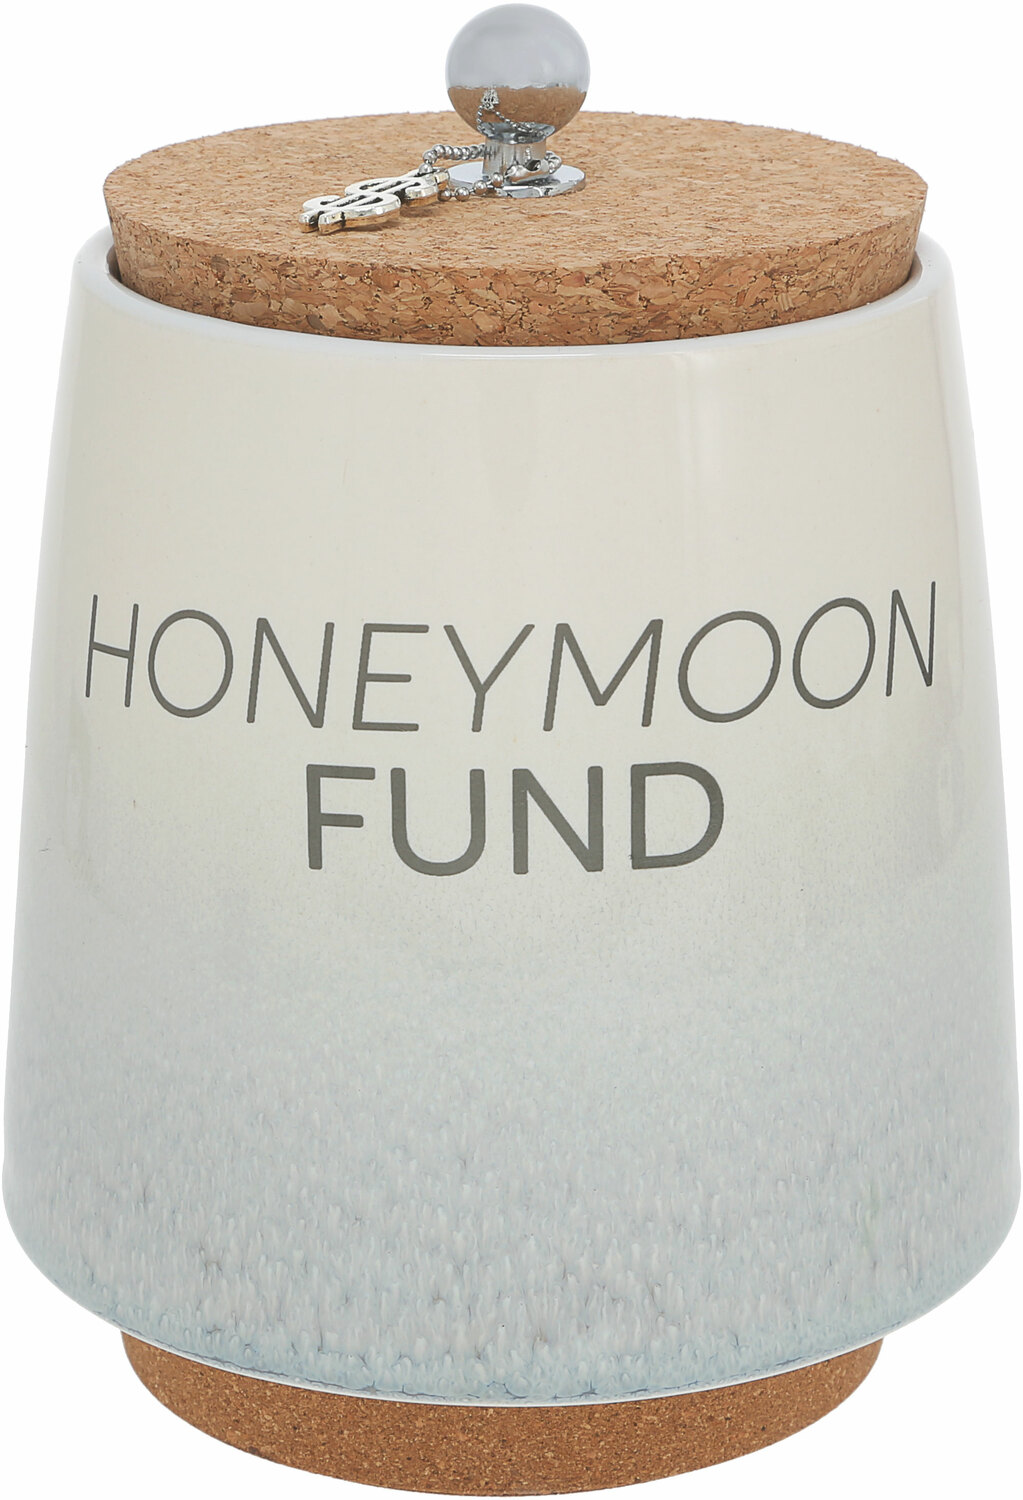 Honeymoon by So Much Fun-d - Honeymoon - 6.5" Ceramic Savings Bank